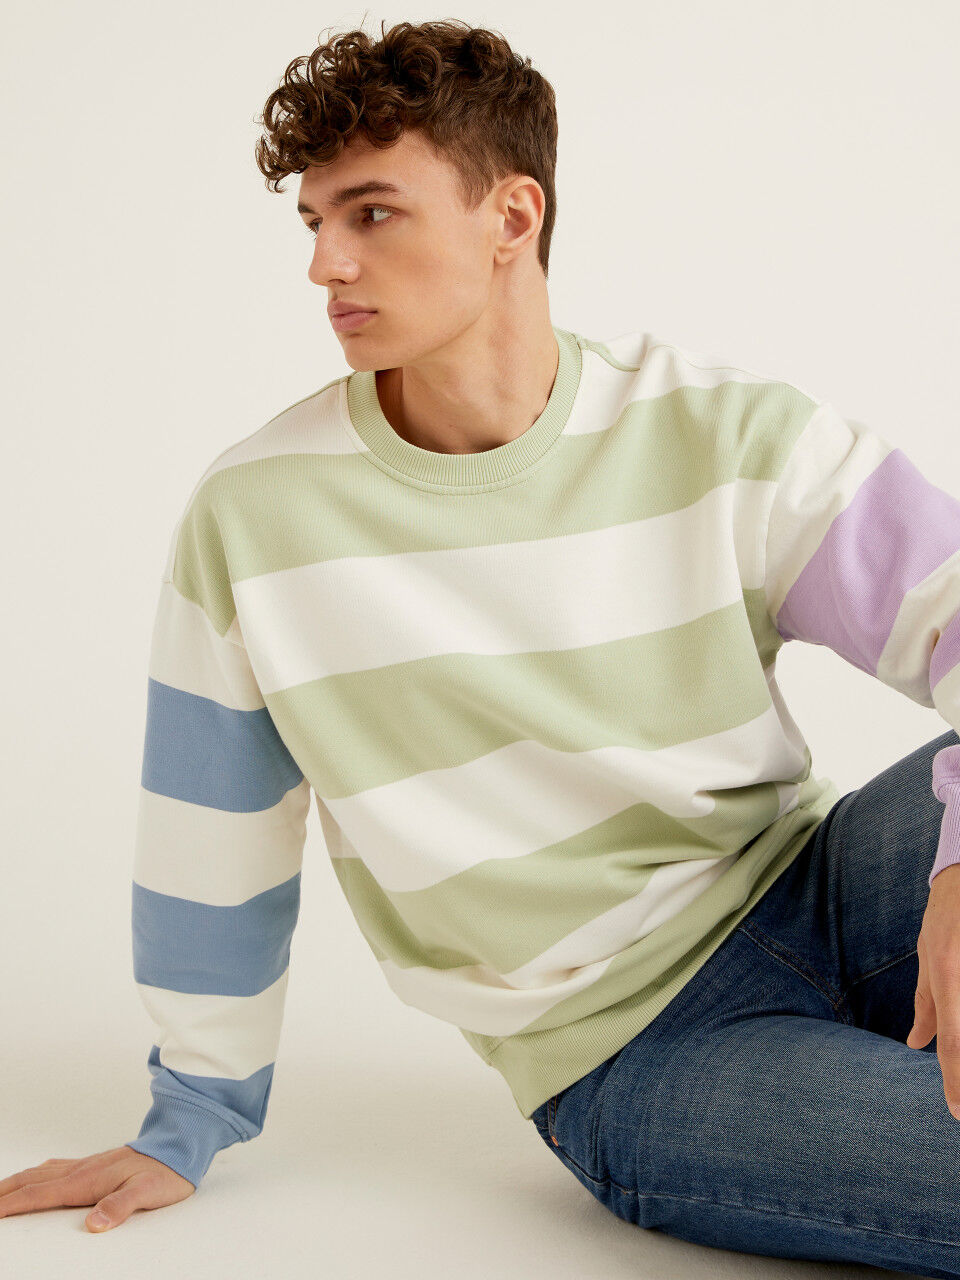 Sweatshirt. 65+ Best Spring & Summer Men's Outfit Ideas - 40